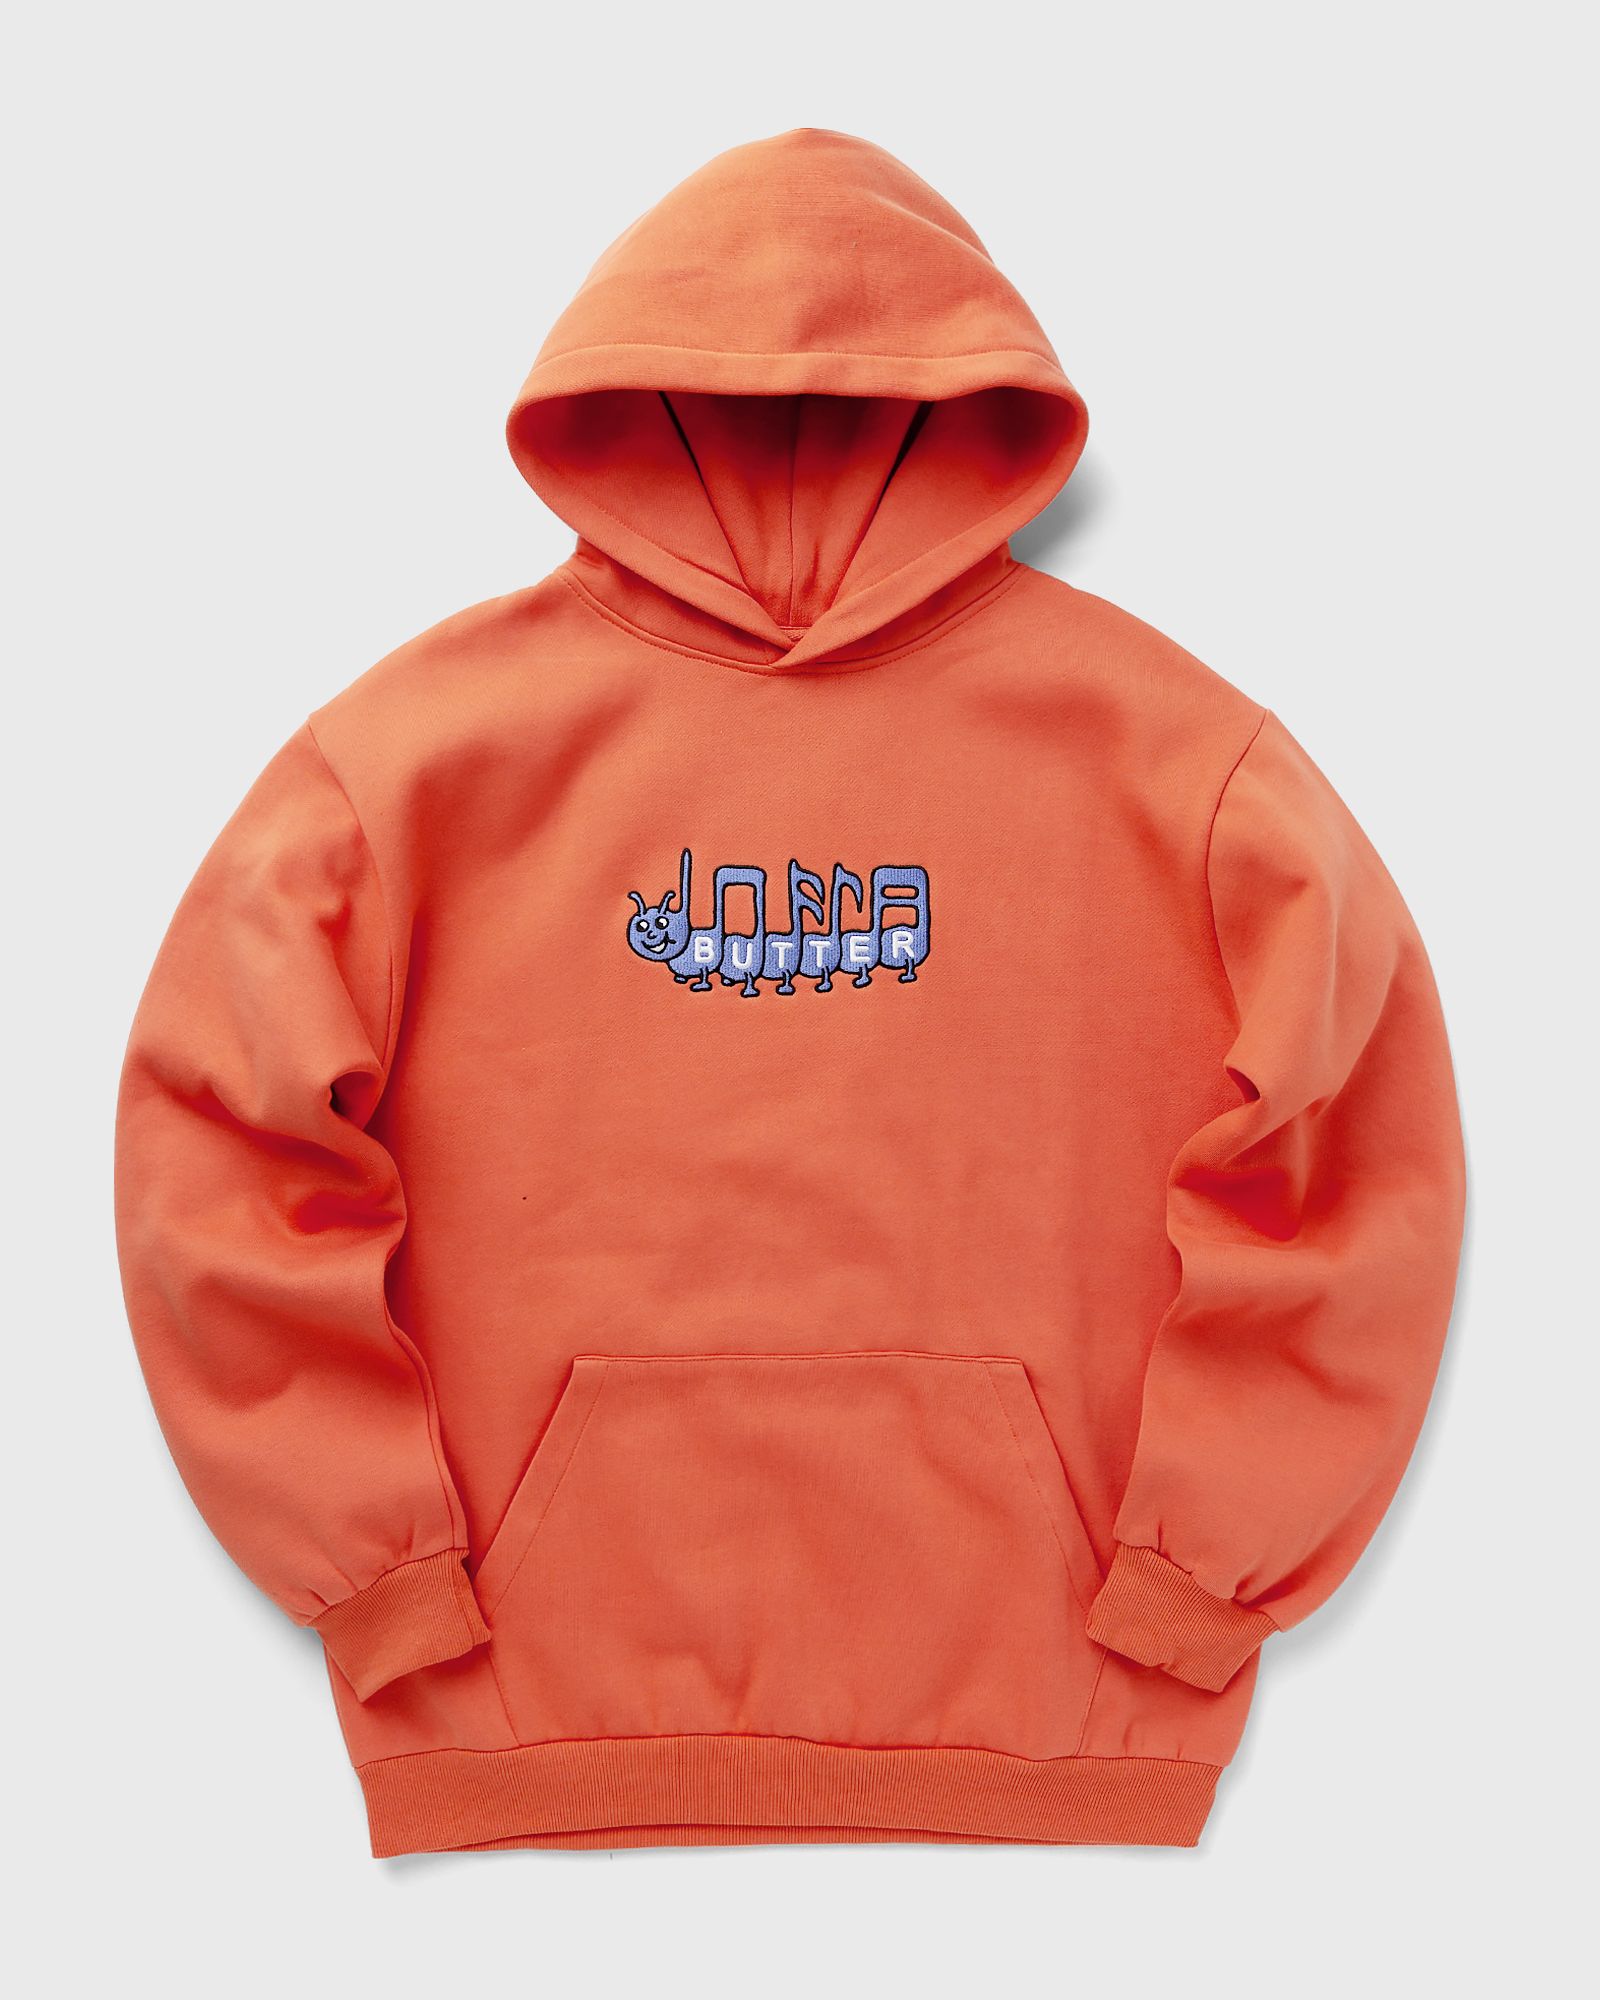 Butter Goods - caterpillar embroidered pullover hood men hoodies orange in größe:m